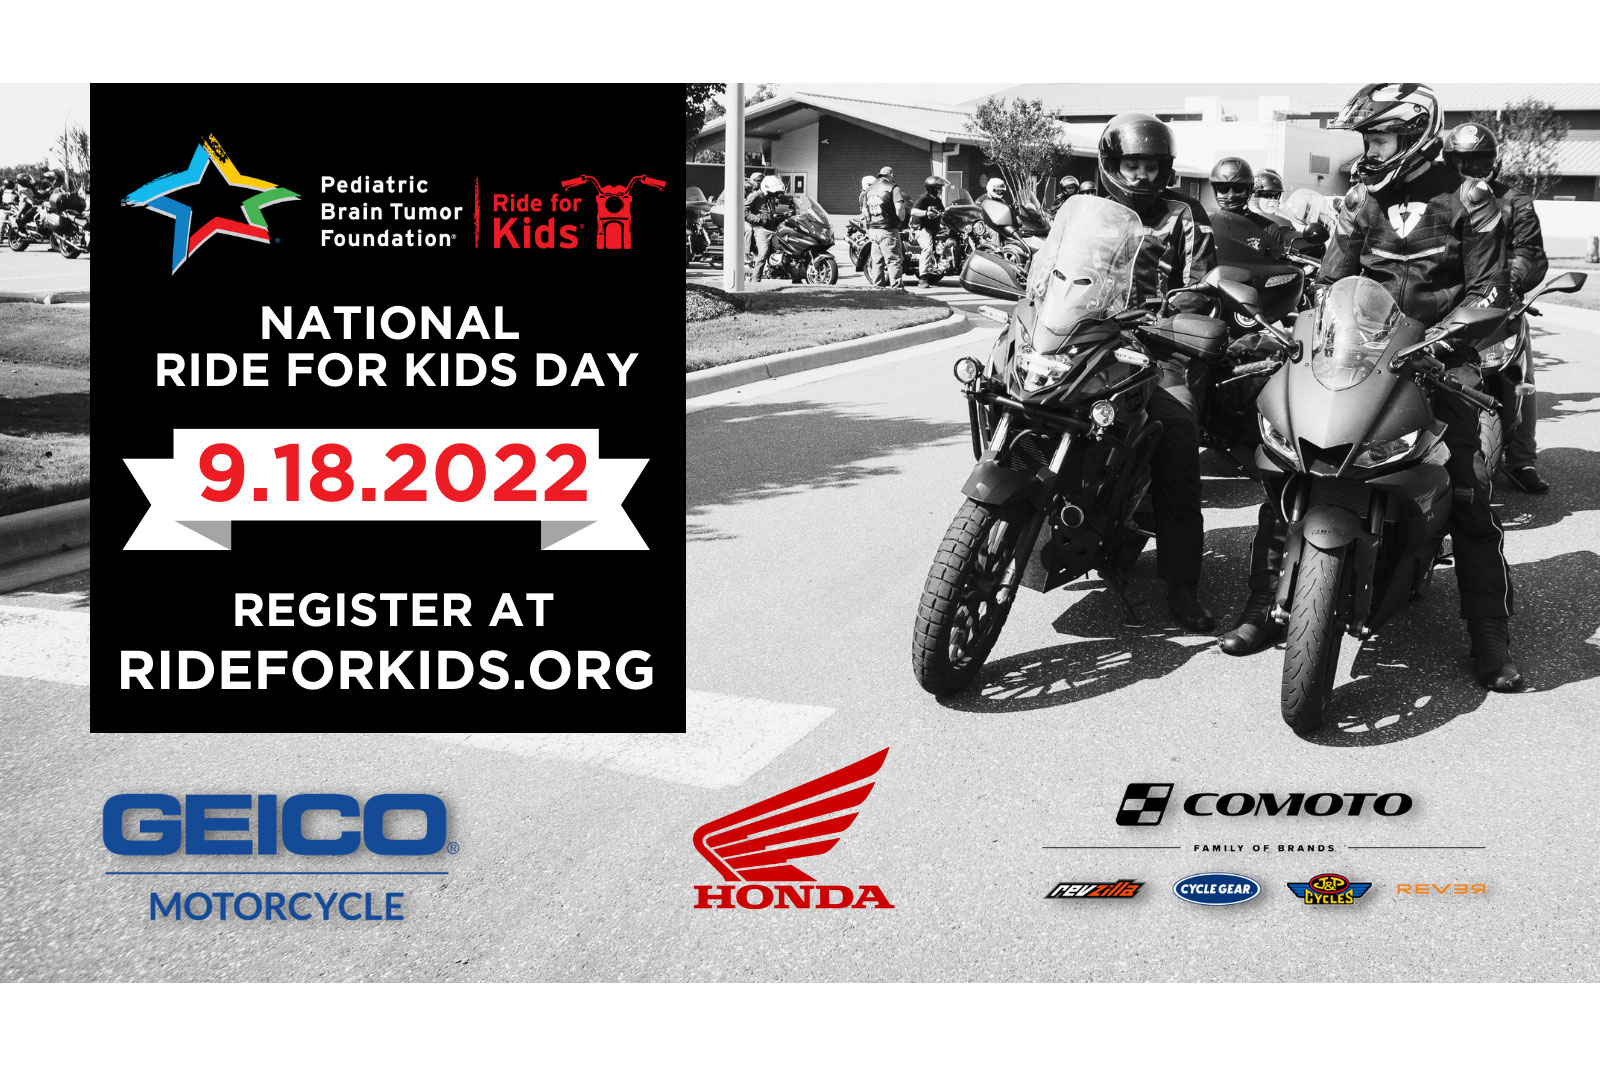 Pediatric Brain Tumor Foundation's second annual national Ride for Kids